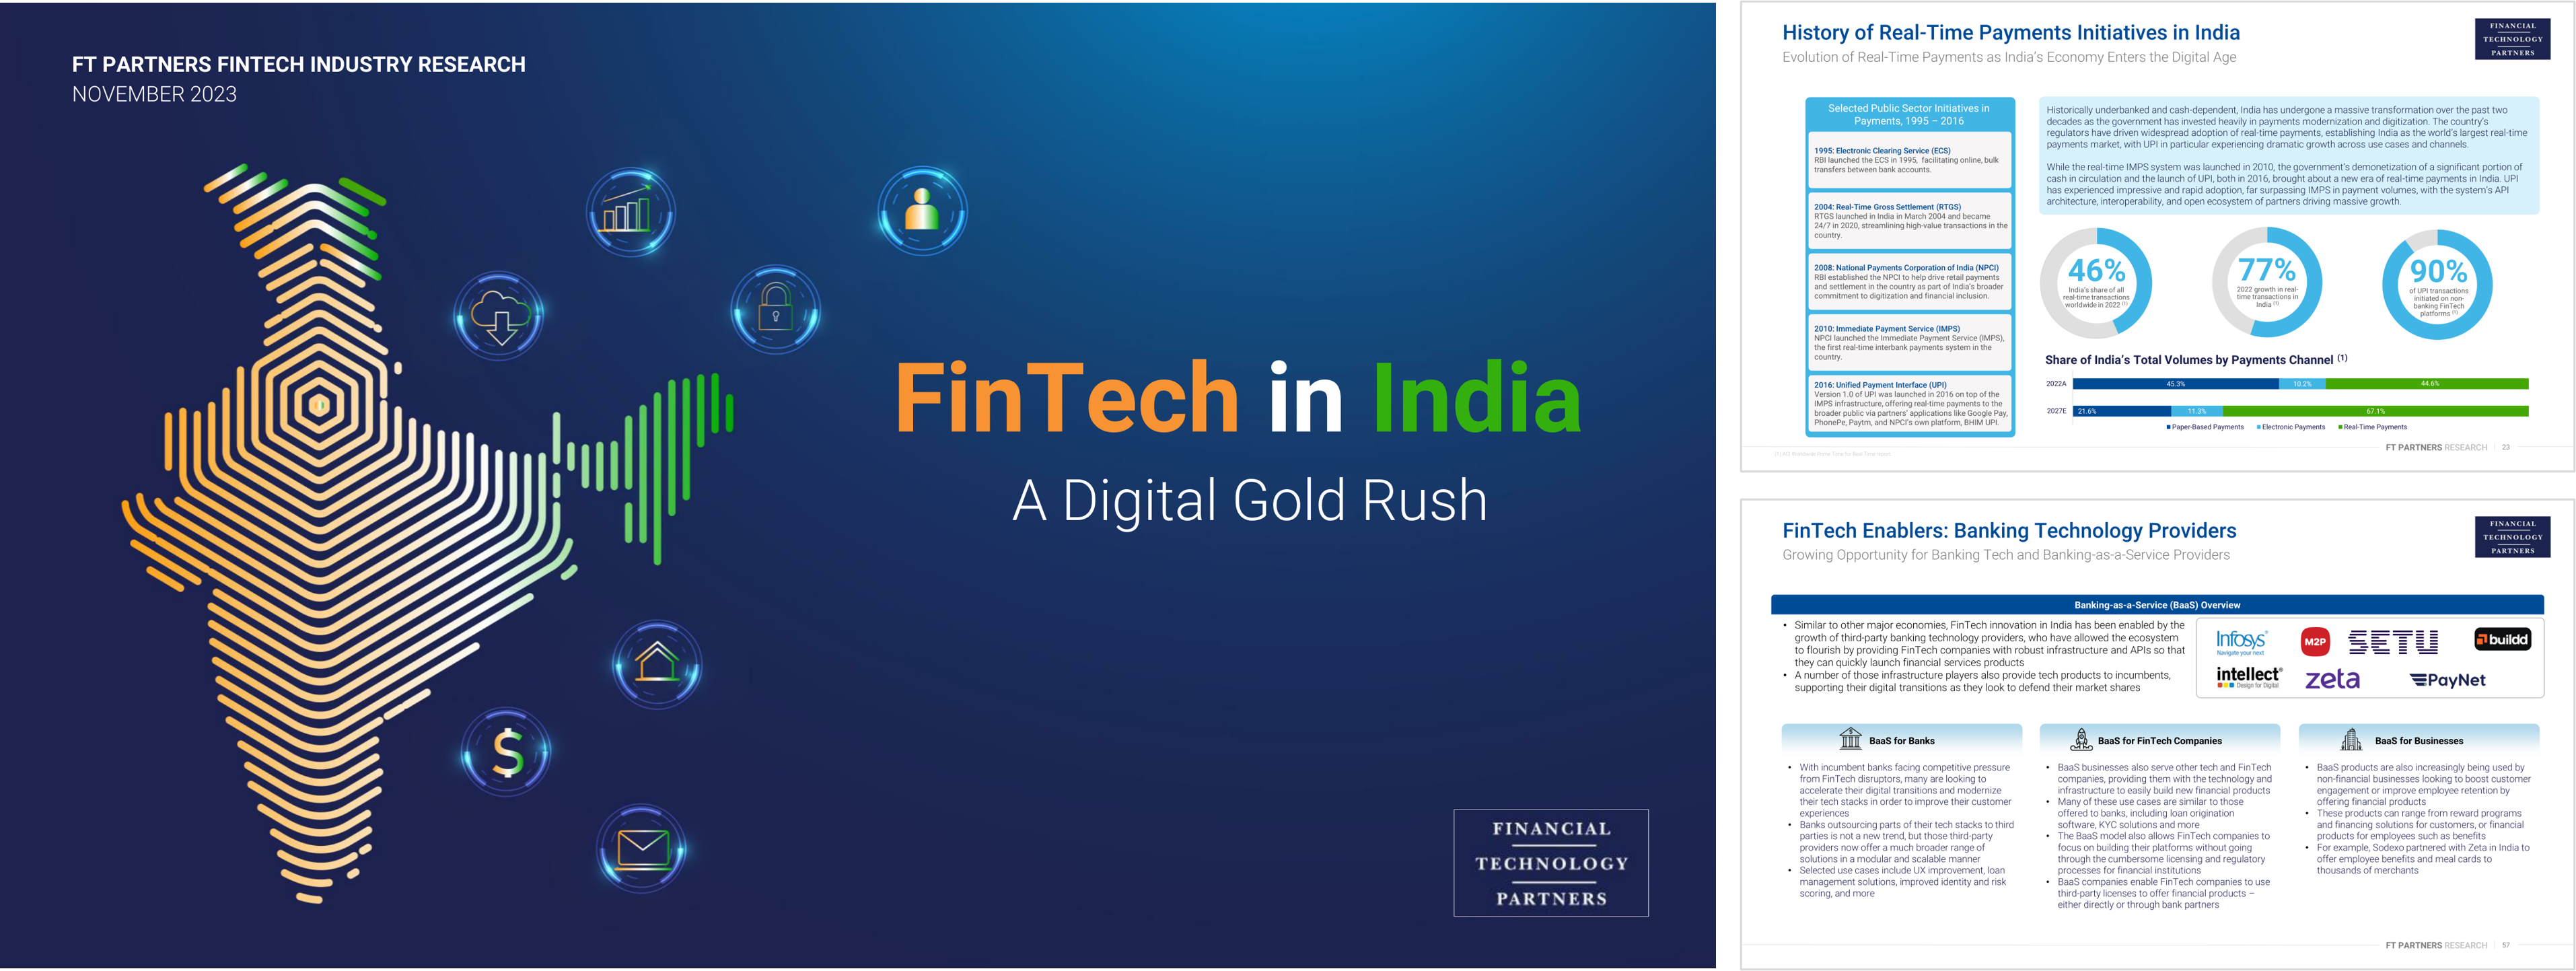 FinTech in India: A Digital Gold Rush report